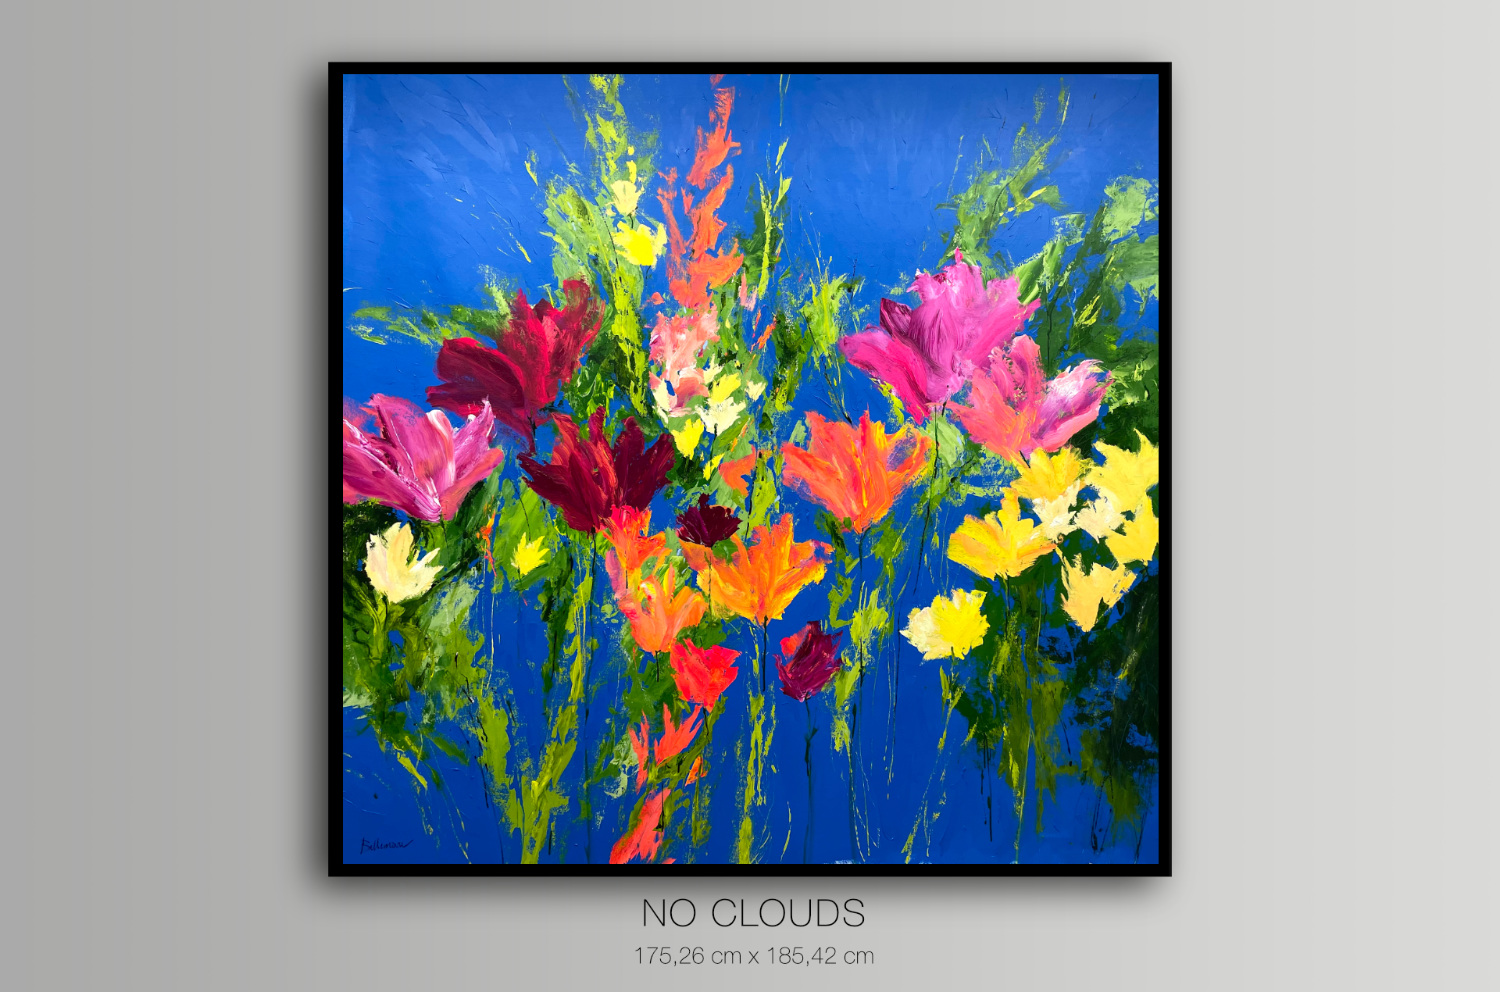 No Clouds - Organik Collection